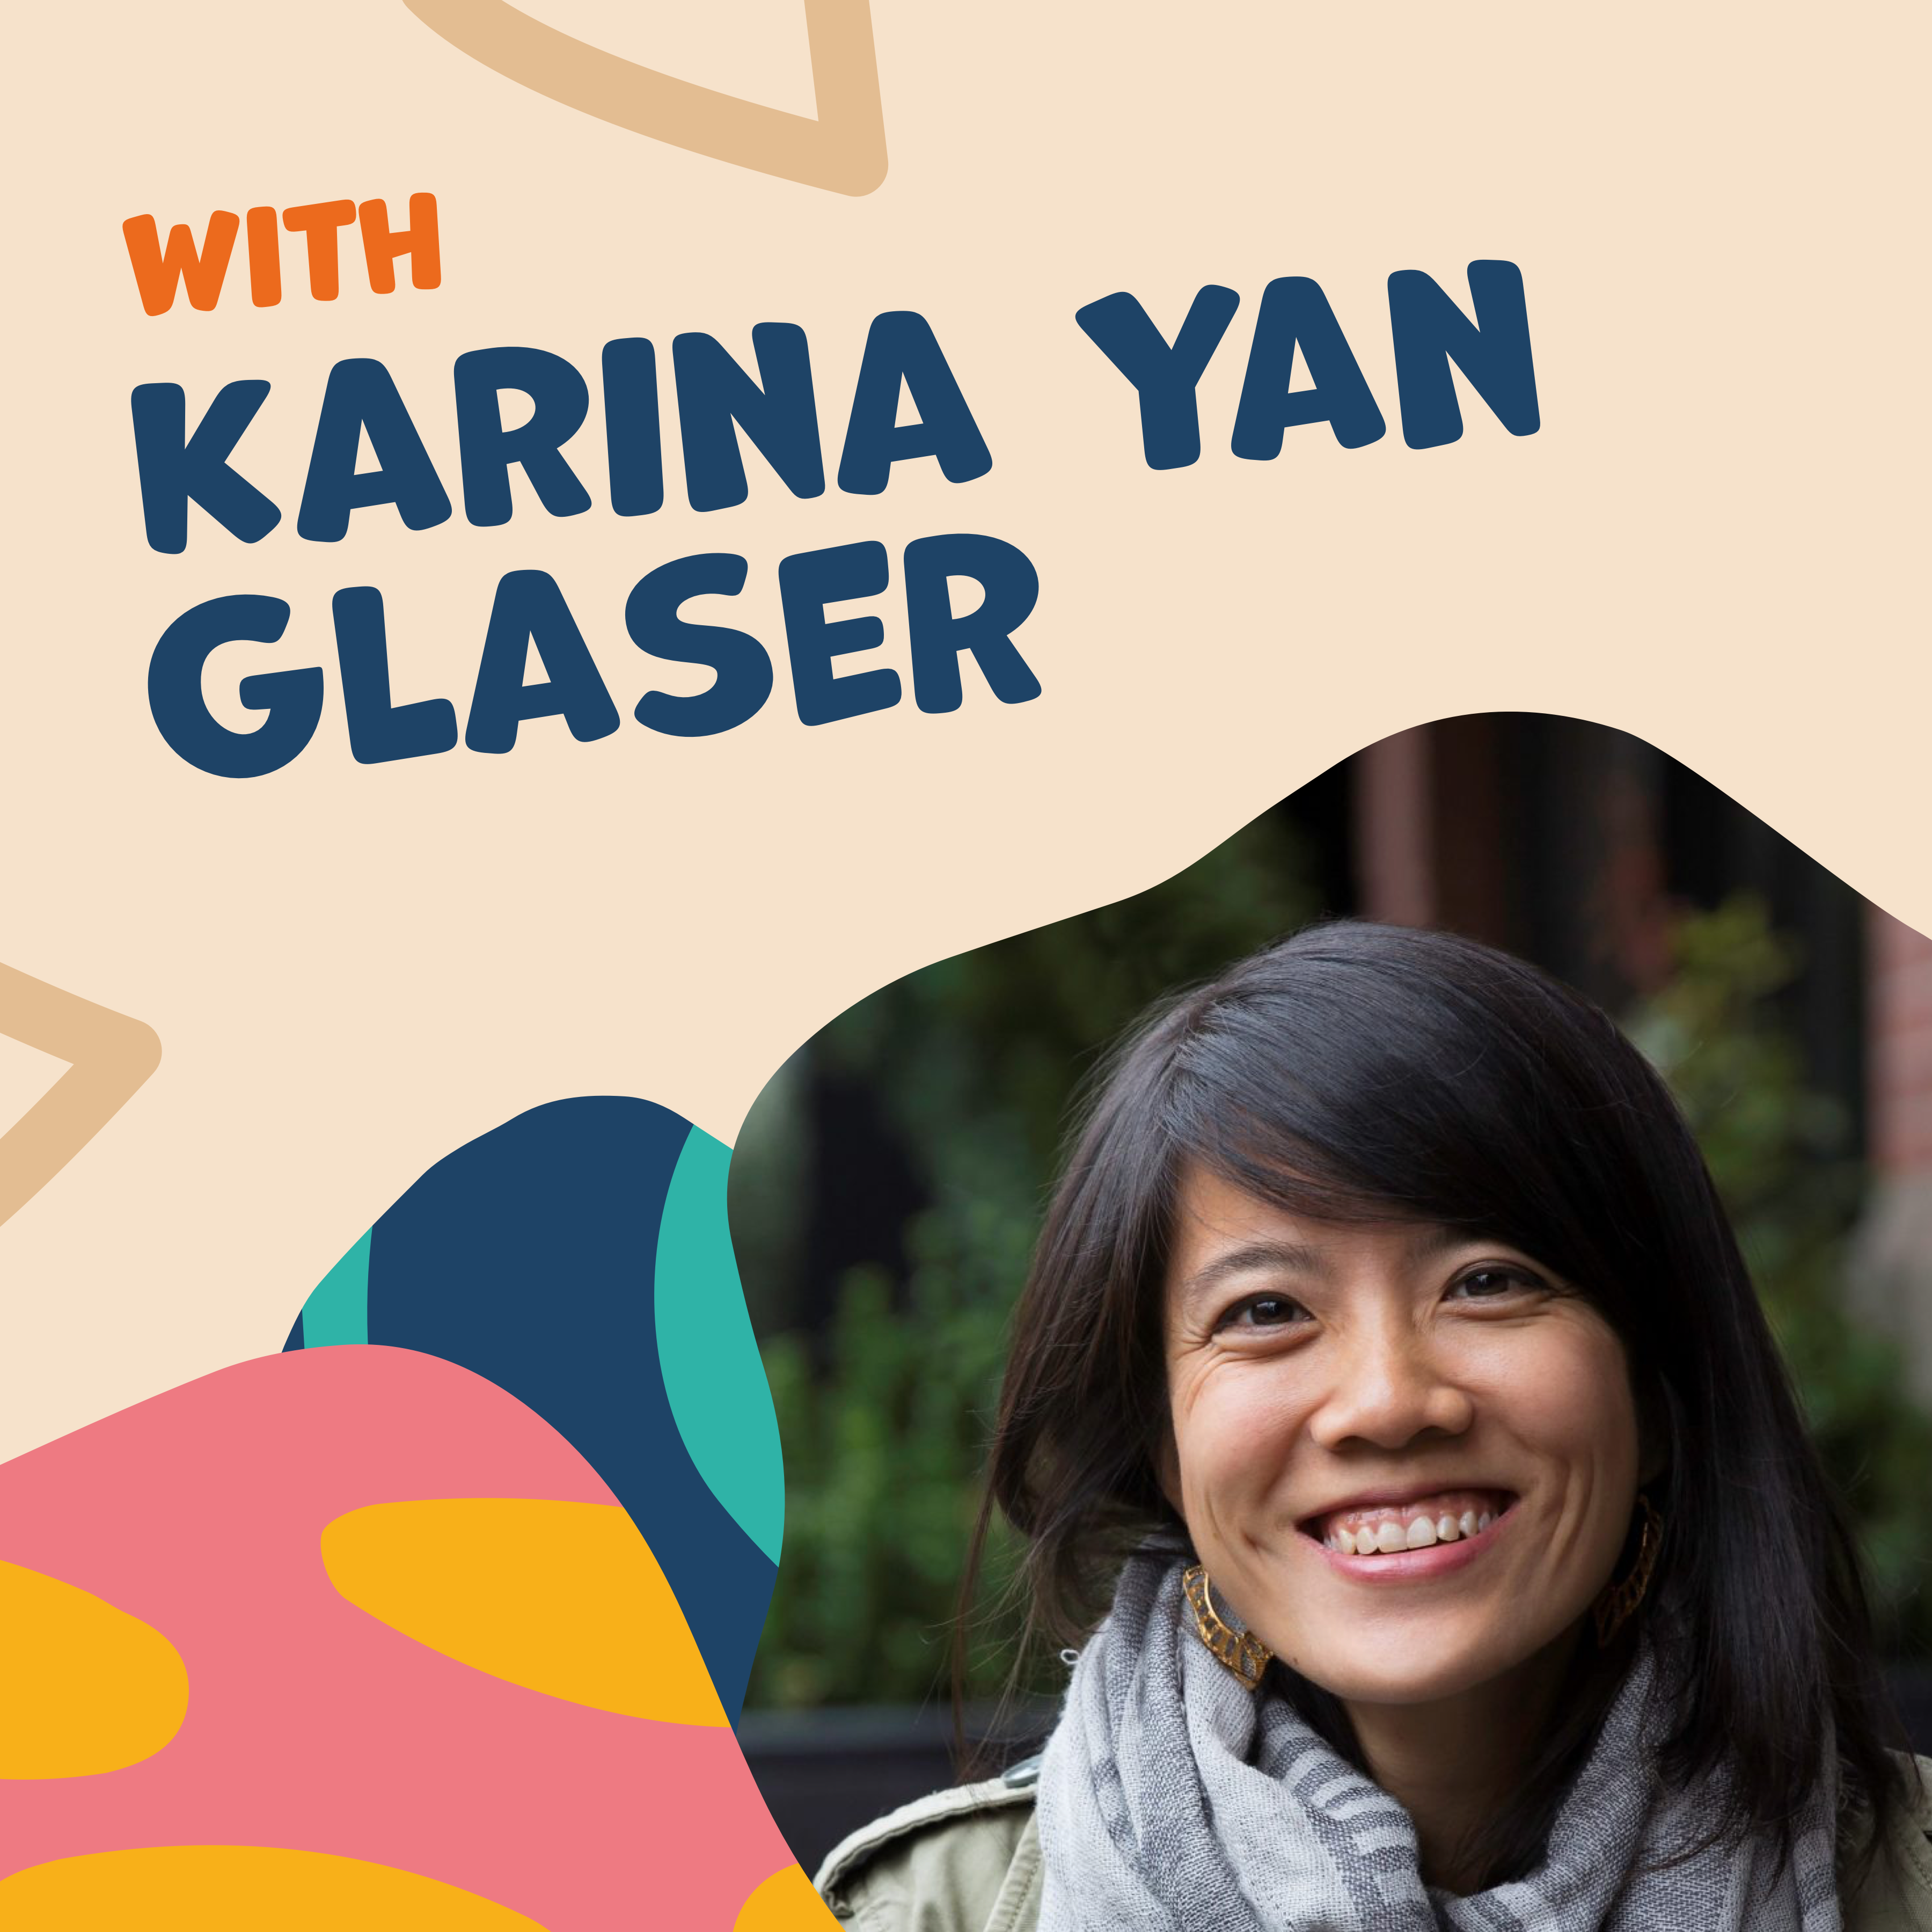 The Reading Culture Pod with Karina Yan Glaser